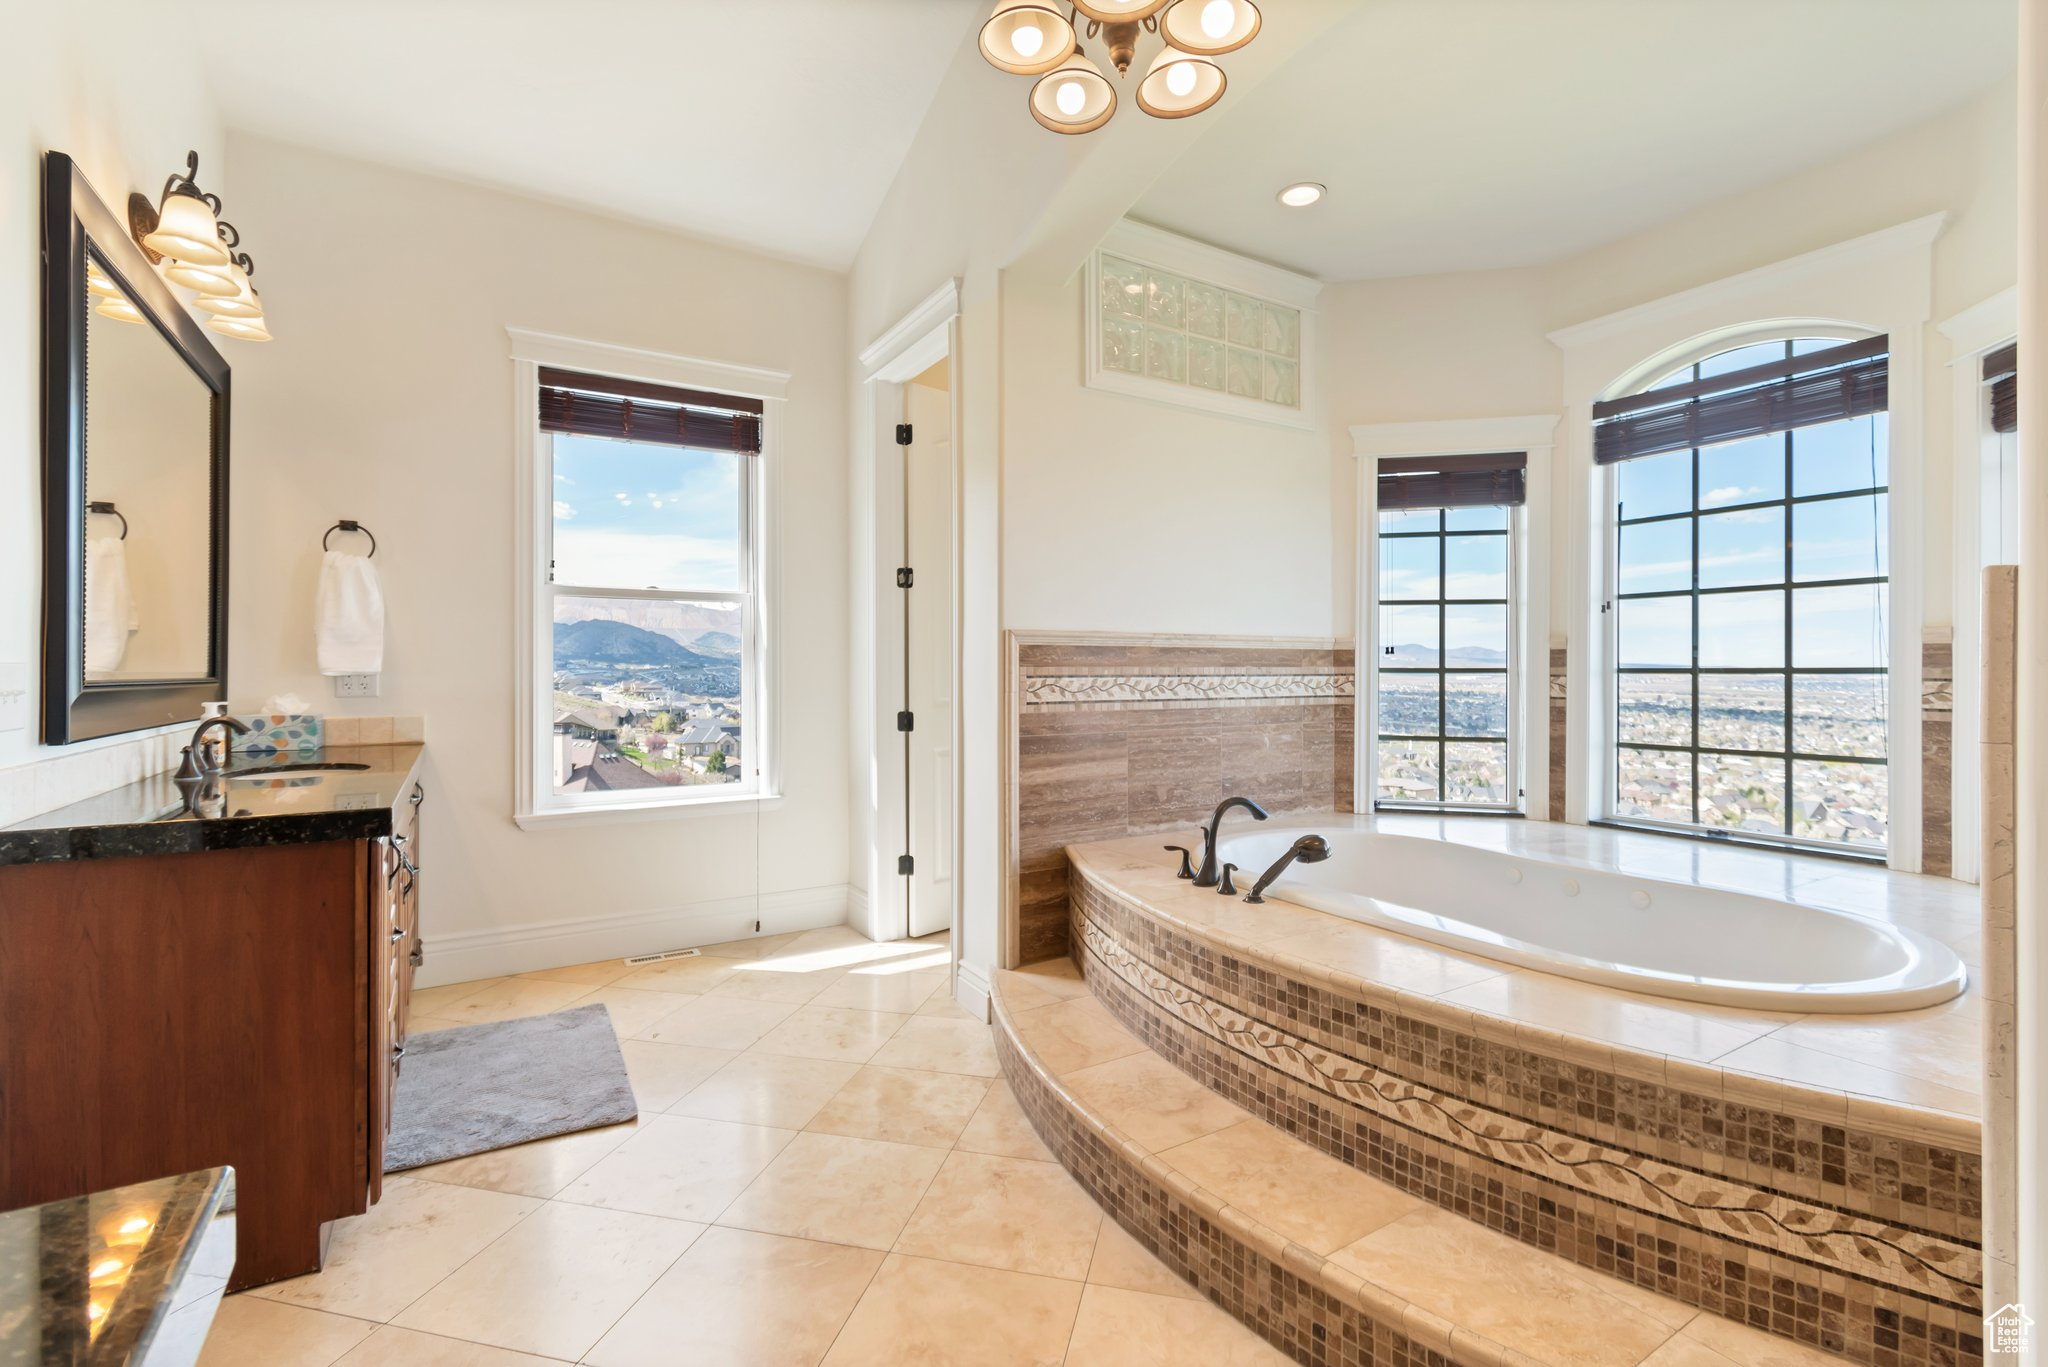 Bathroom featuring tile flooring, vanity, and tiled bath